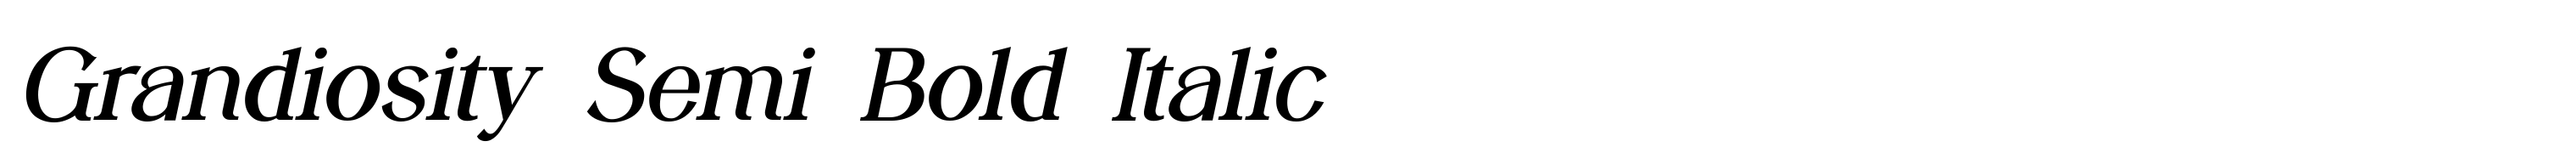 Grandiosity Semi Bold Italic